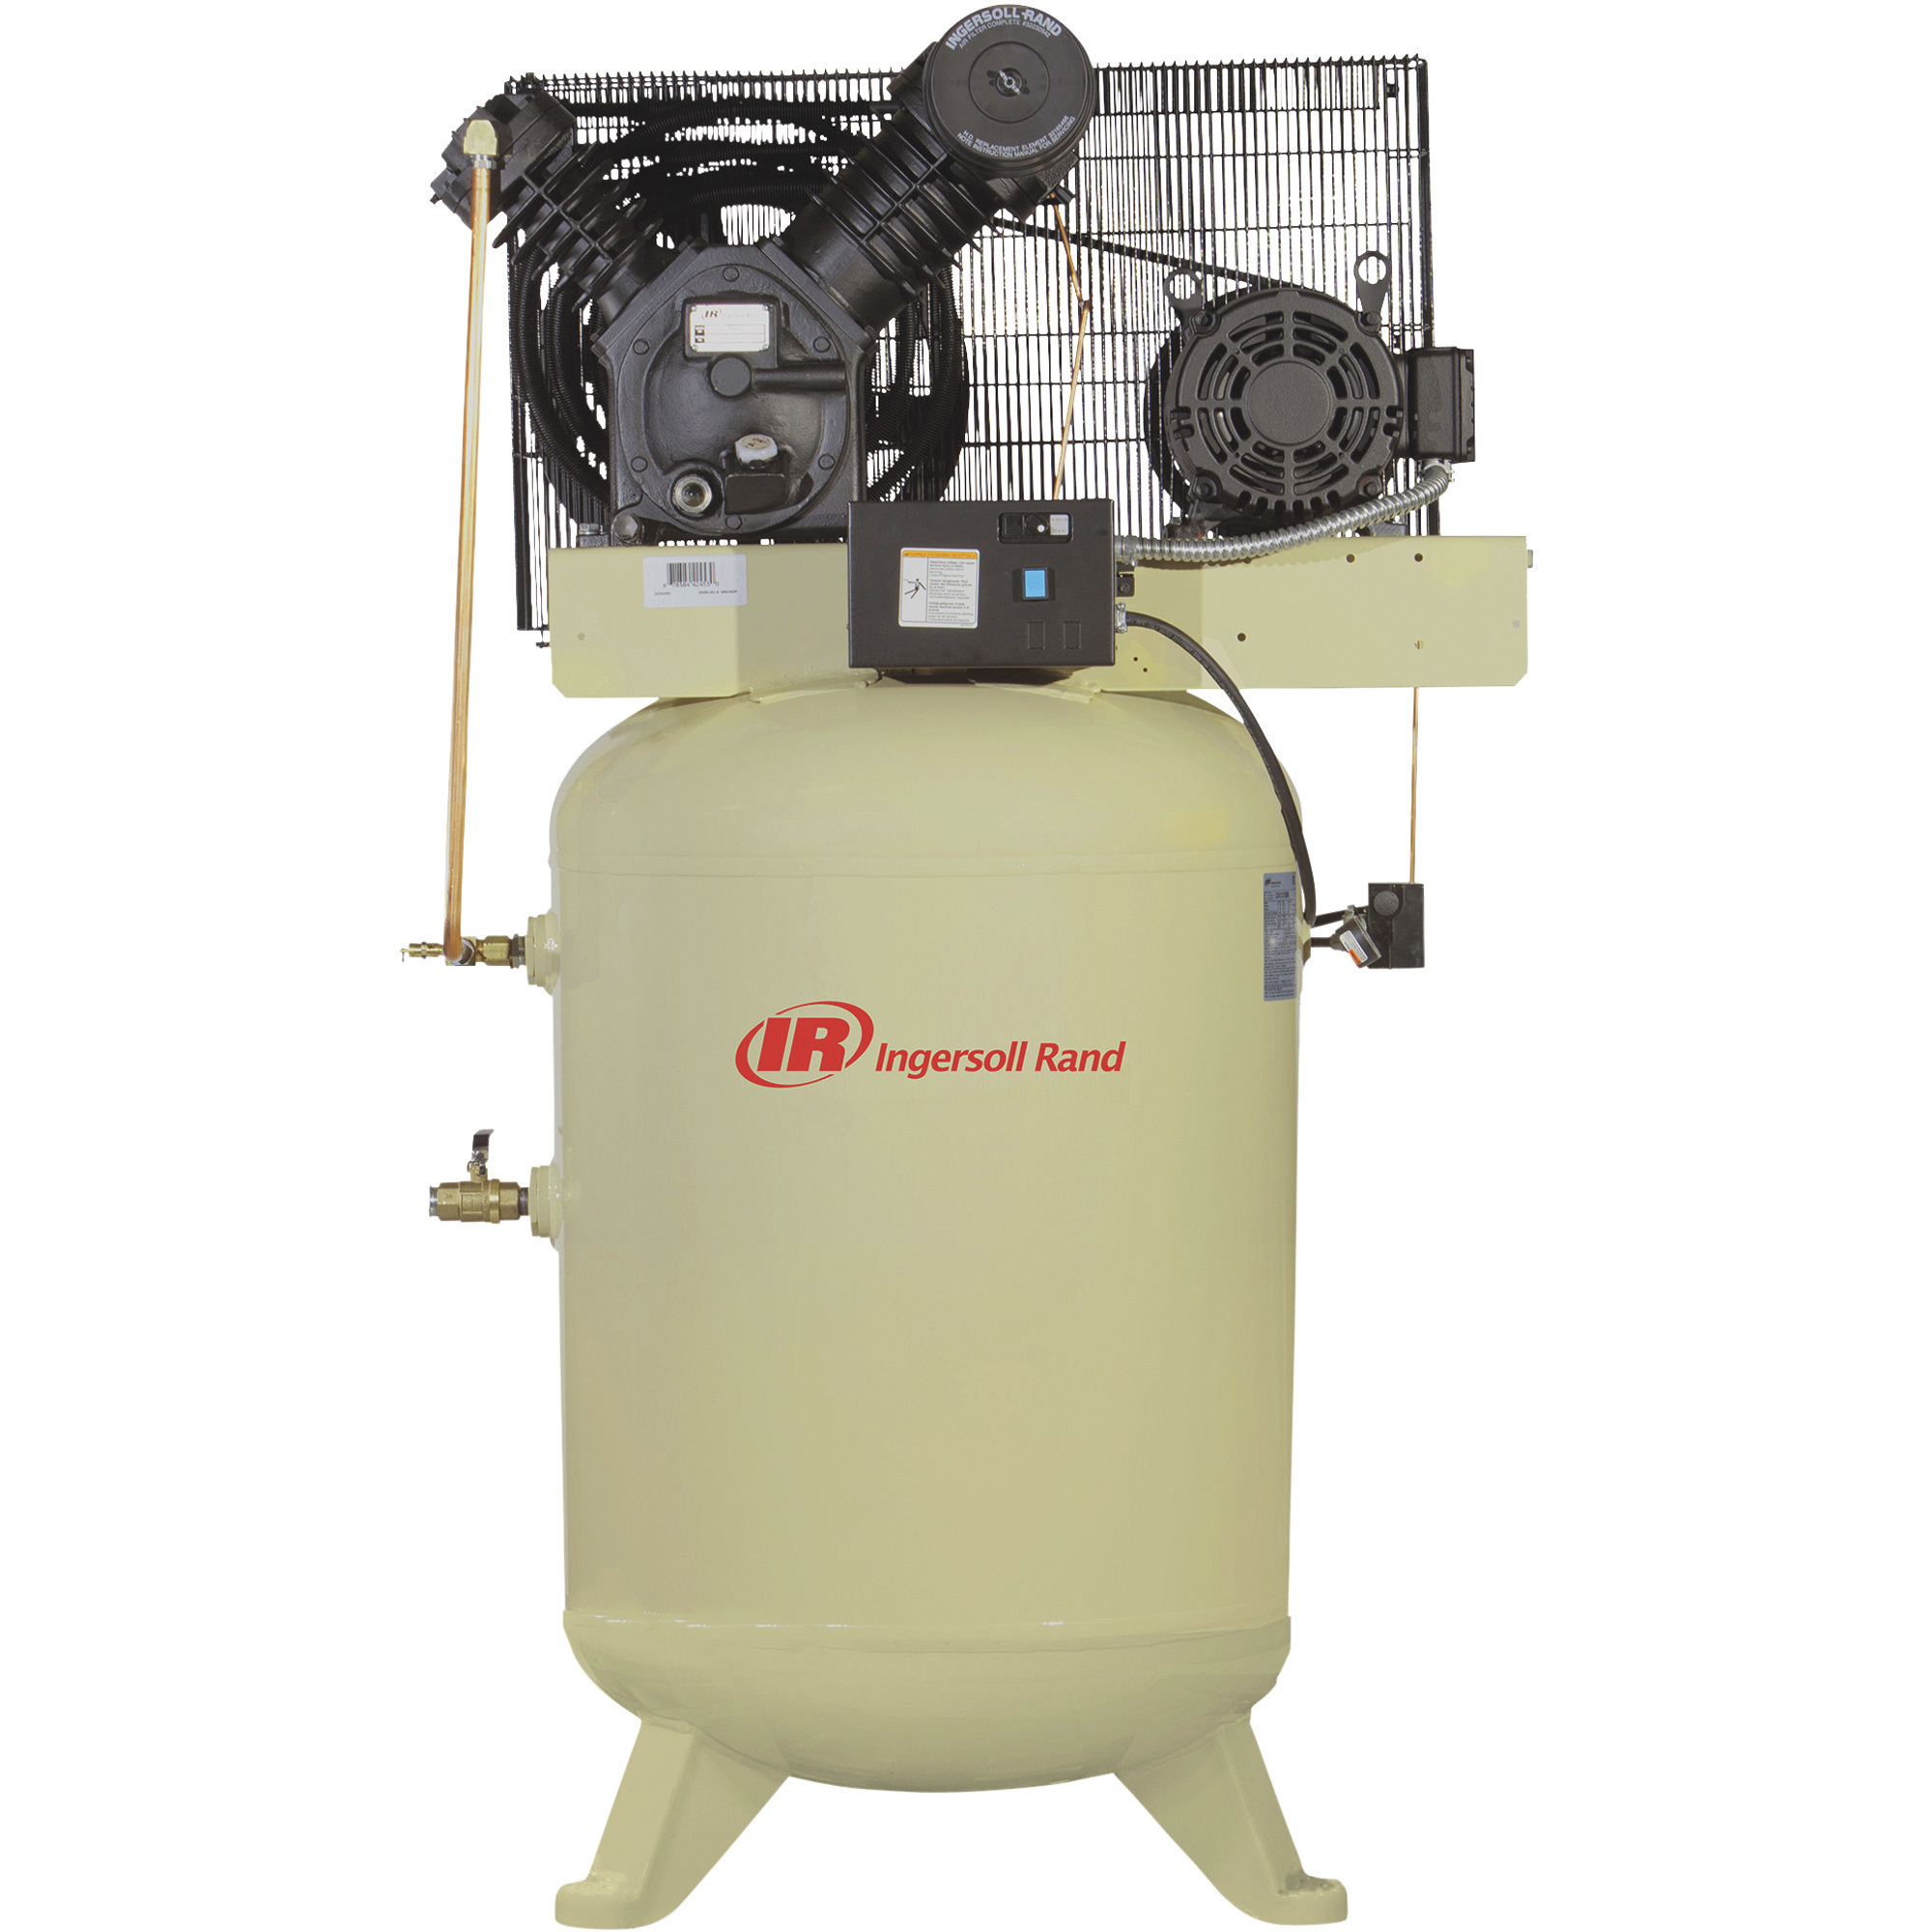 Ingersoll Rand Type-30 Reciprocating Air Compressor, 10 HP, 460 Volt, 3 Phase, 120 Gallon Vertical, Model 2545K10-V